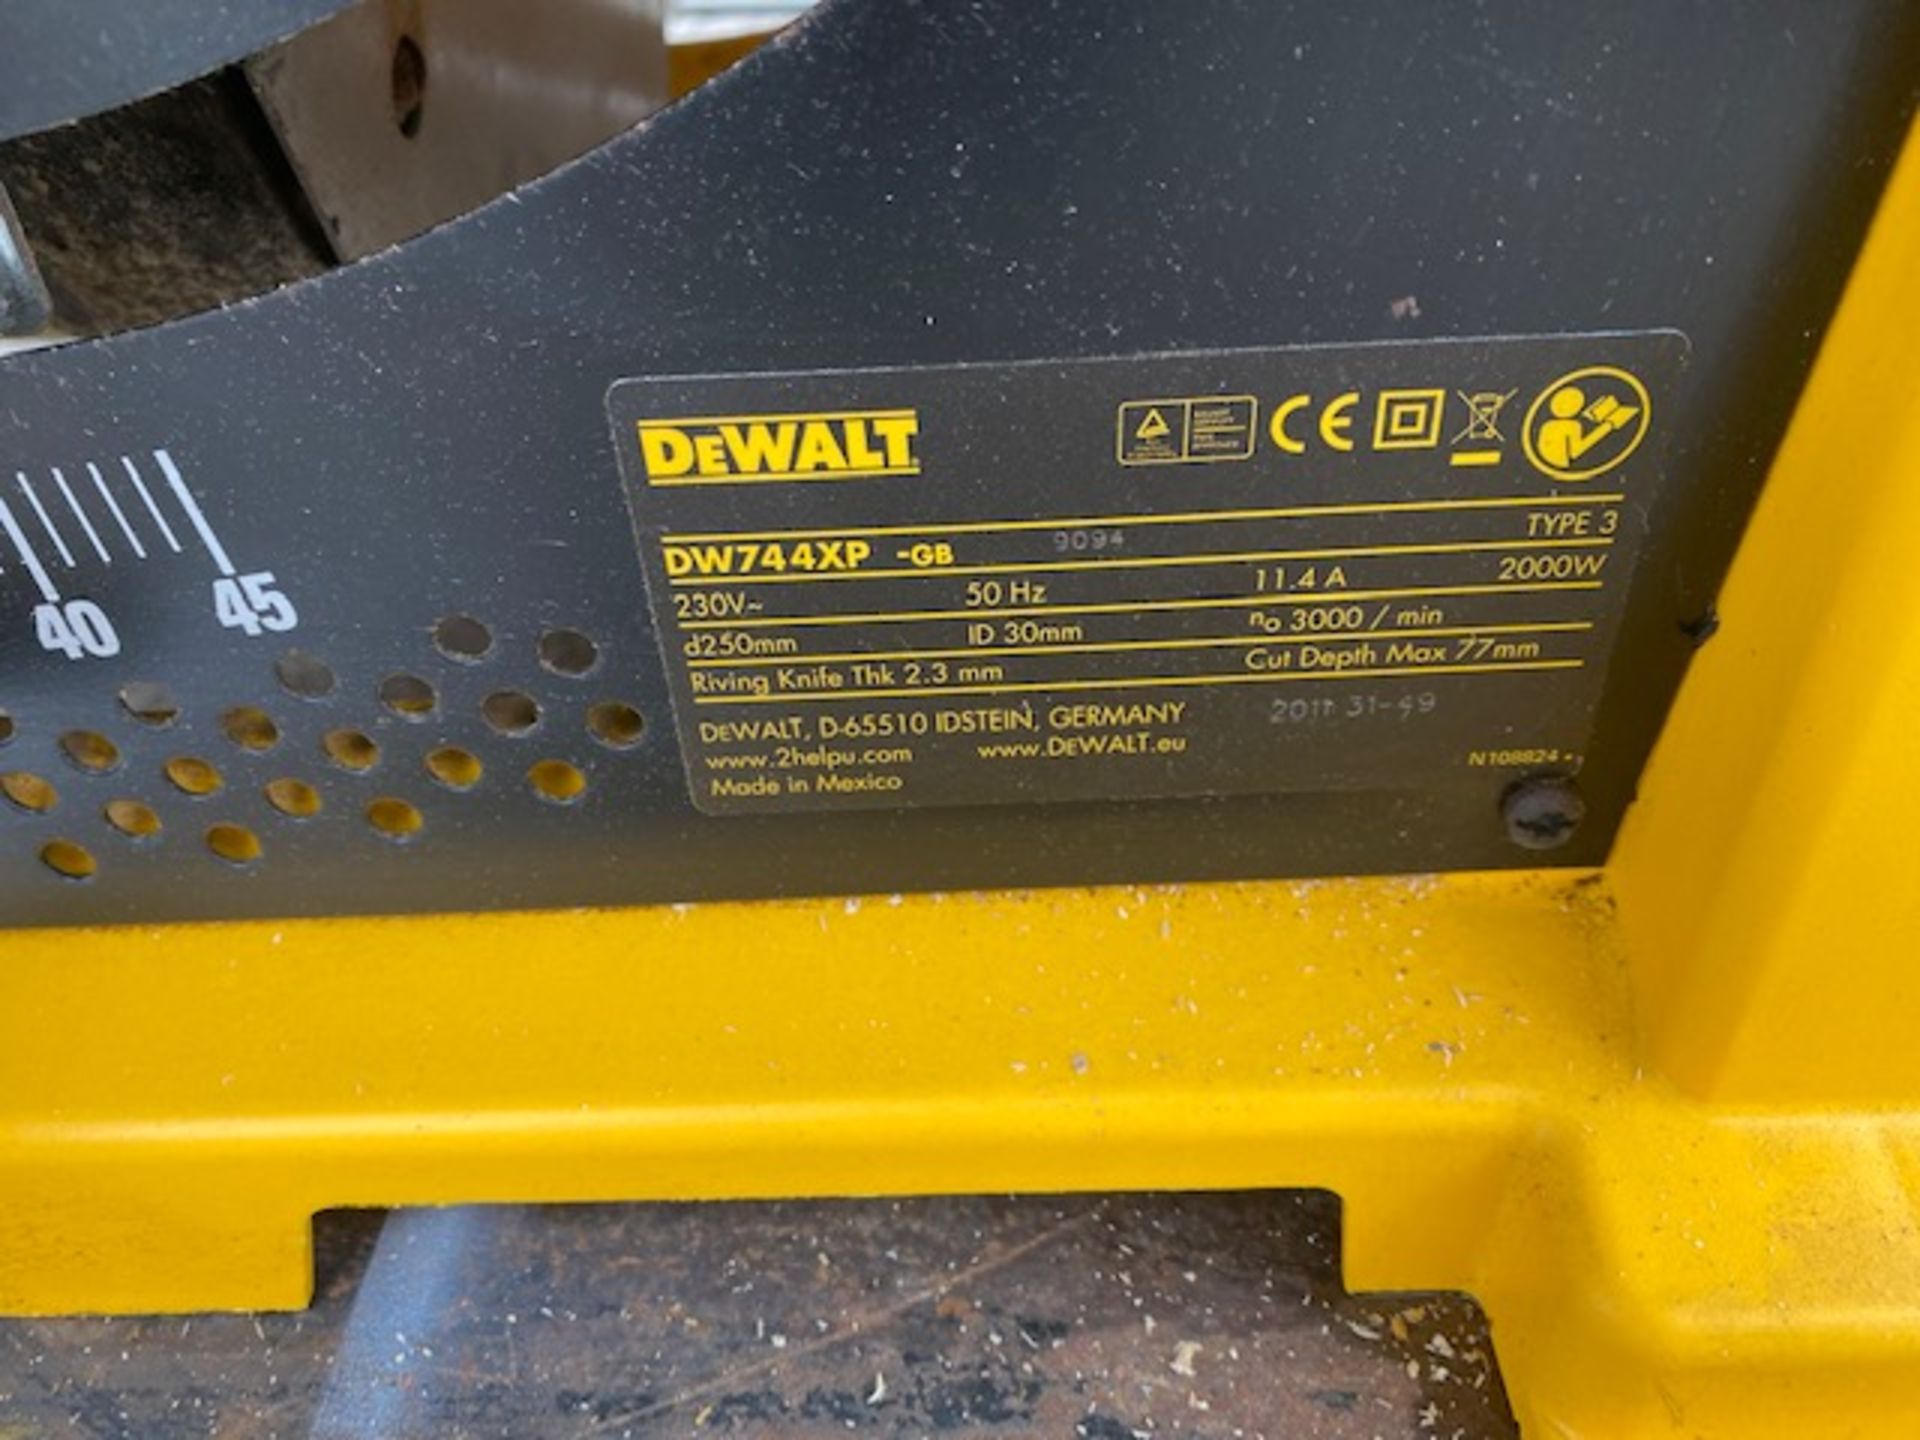 DeWalt DW744XP Site/ Bench Top Saw, 240V (vendors comments - good condition), lot location - - Image 5 of 5